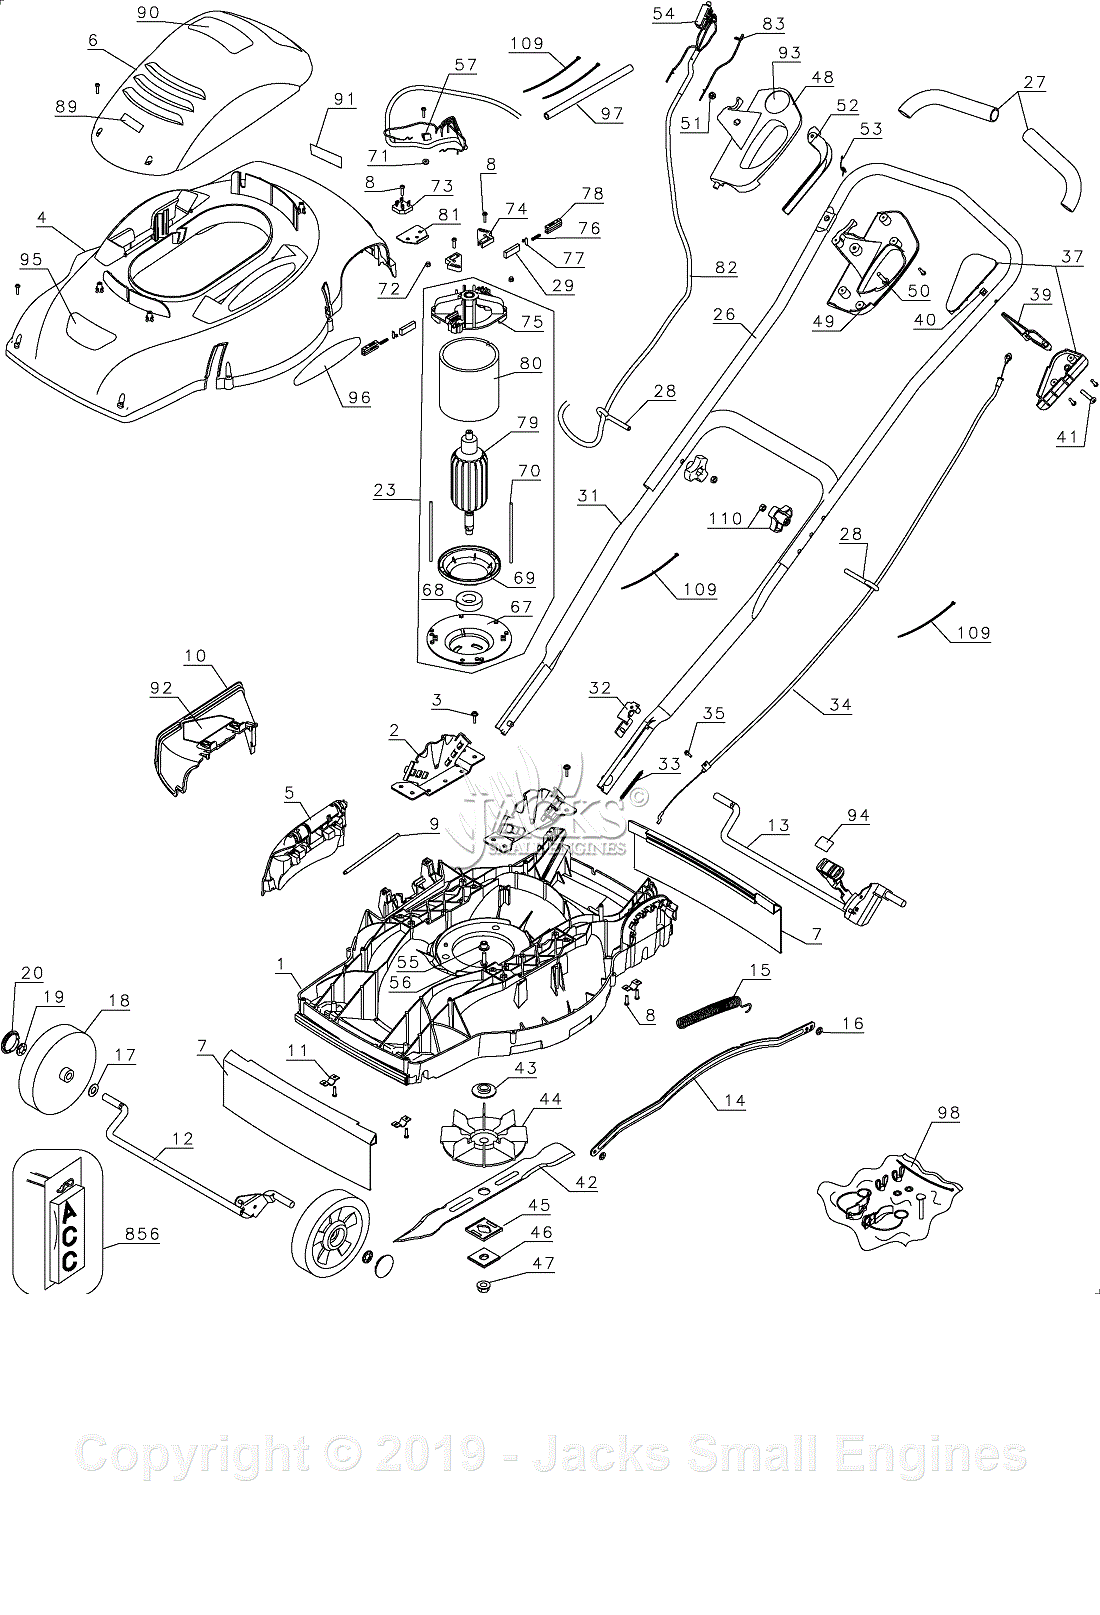 https://az417944.vo.msecnd.net/diagrams/manufacturer/black-decker/lawn-mower/mm675-type-1/mower/diagram_1.gif